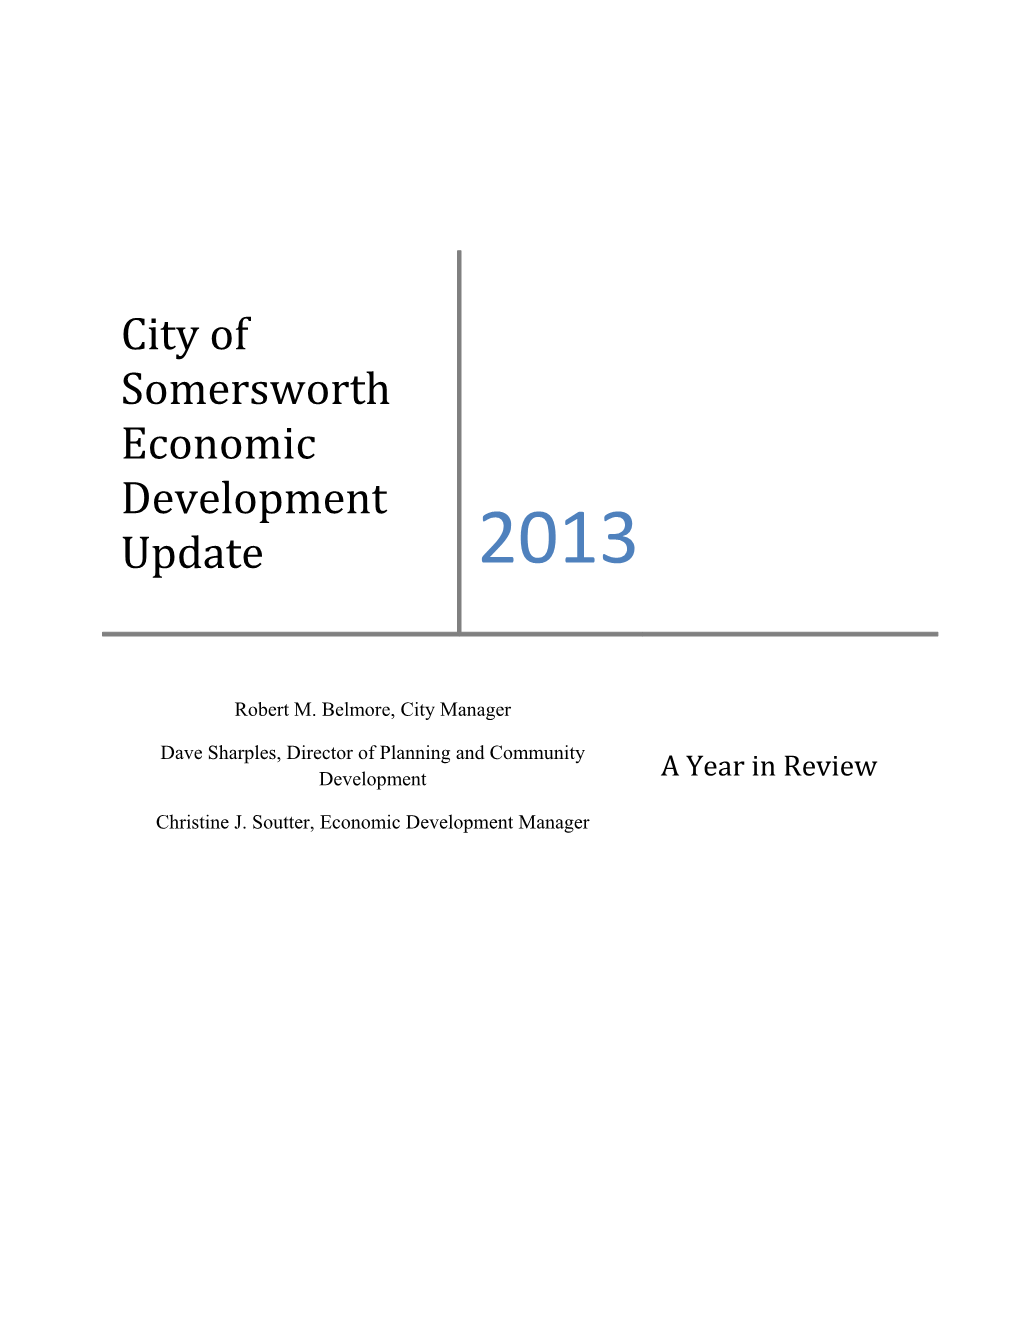 City of Somersworth Economic Development Update